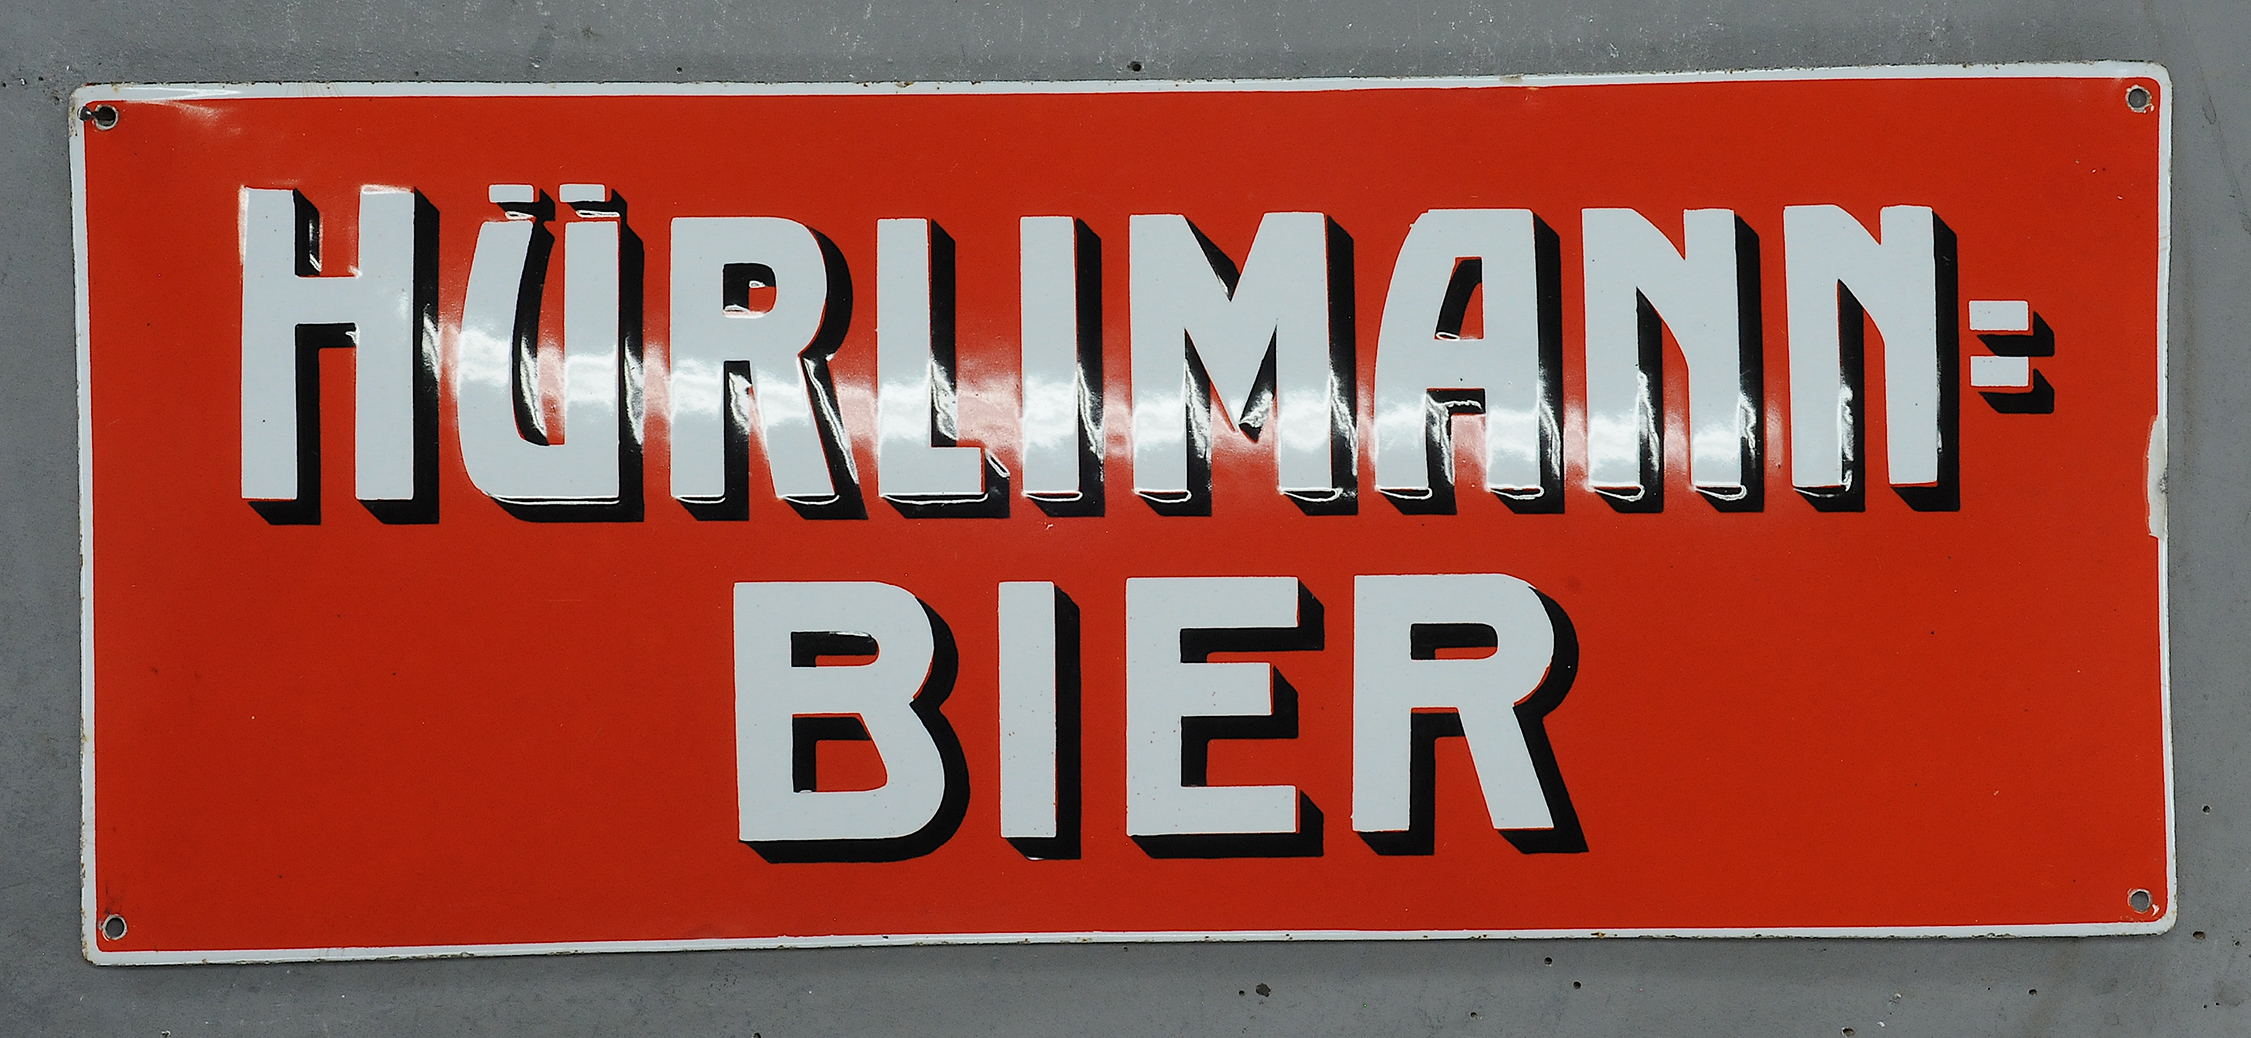 Hürlimann Bier - Image 3 of 3